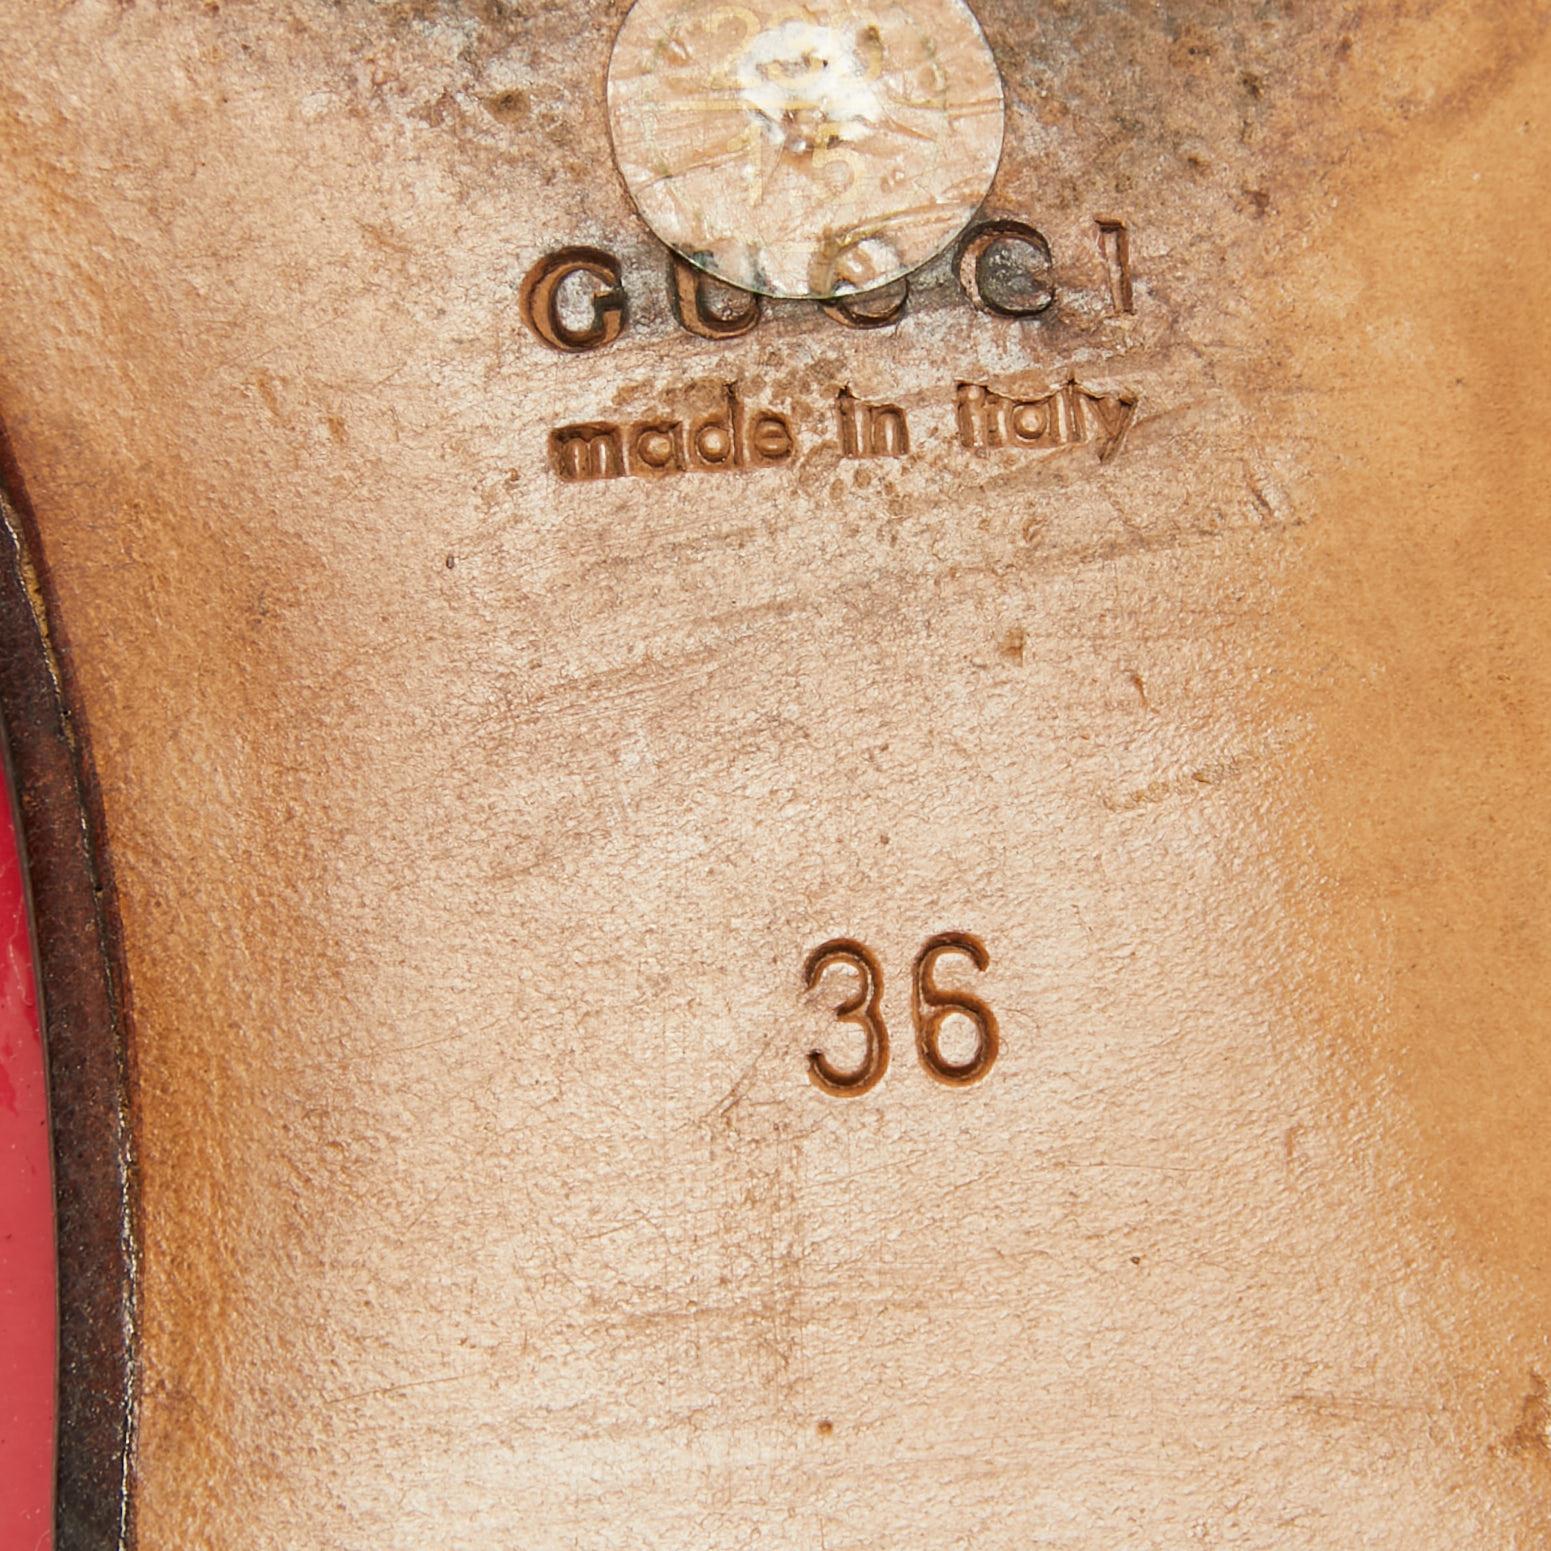 Gucci Pink Patent Leather Horsebit Loafers Size 36 In Fair Condition For Sale In Dubai, Al Qouz 2